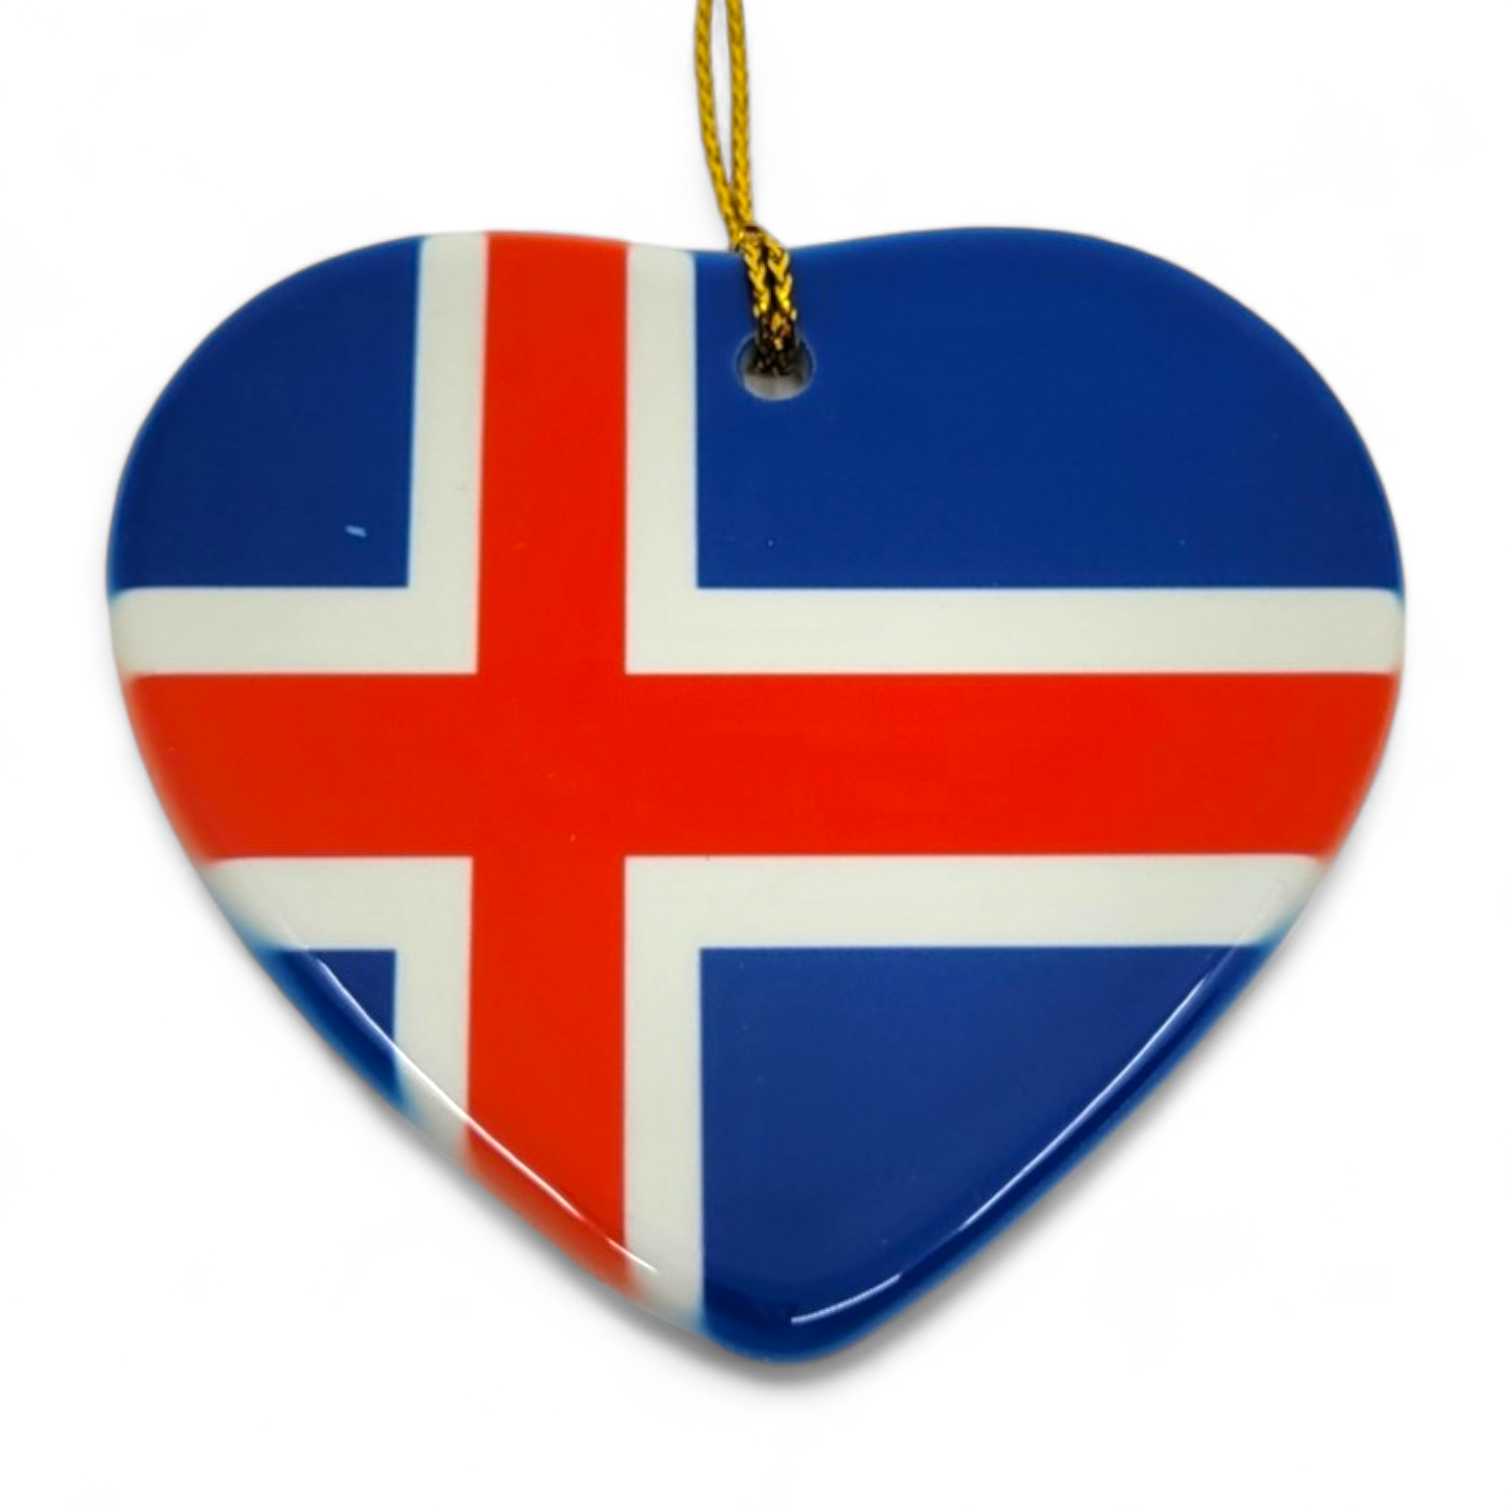 Ornament: 3" Heart Shaped Iceland Flag